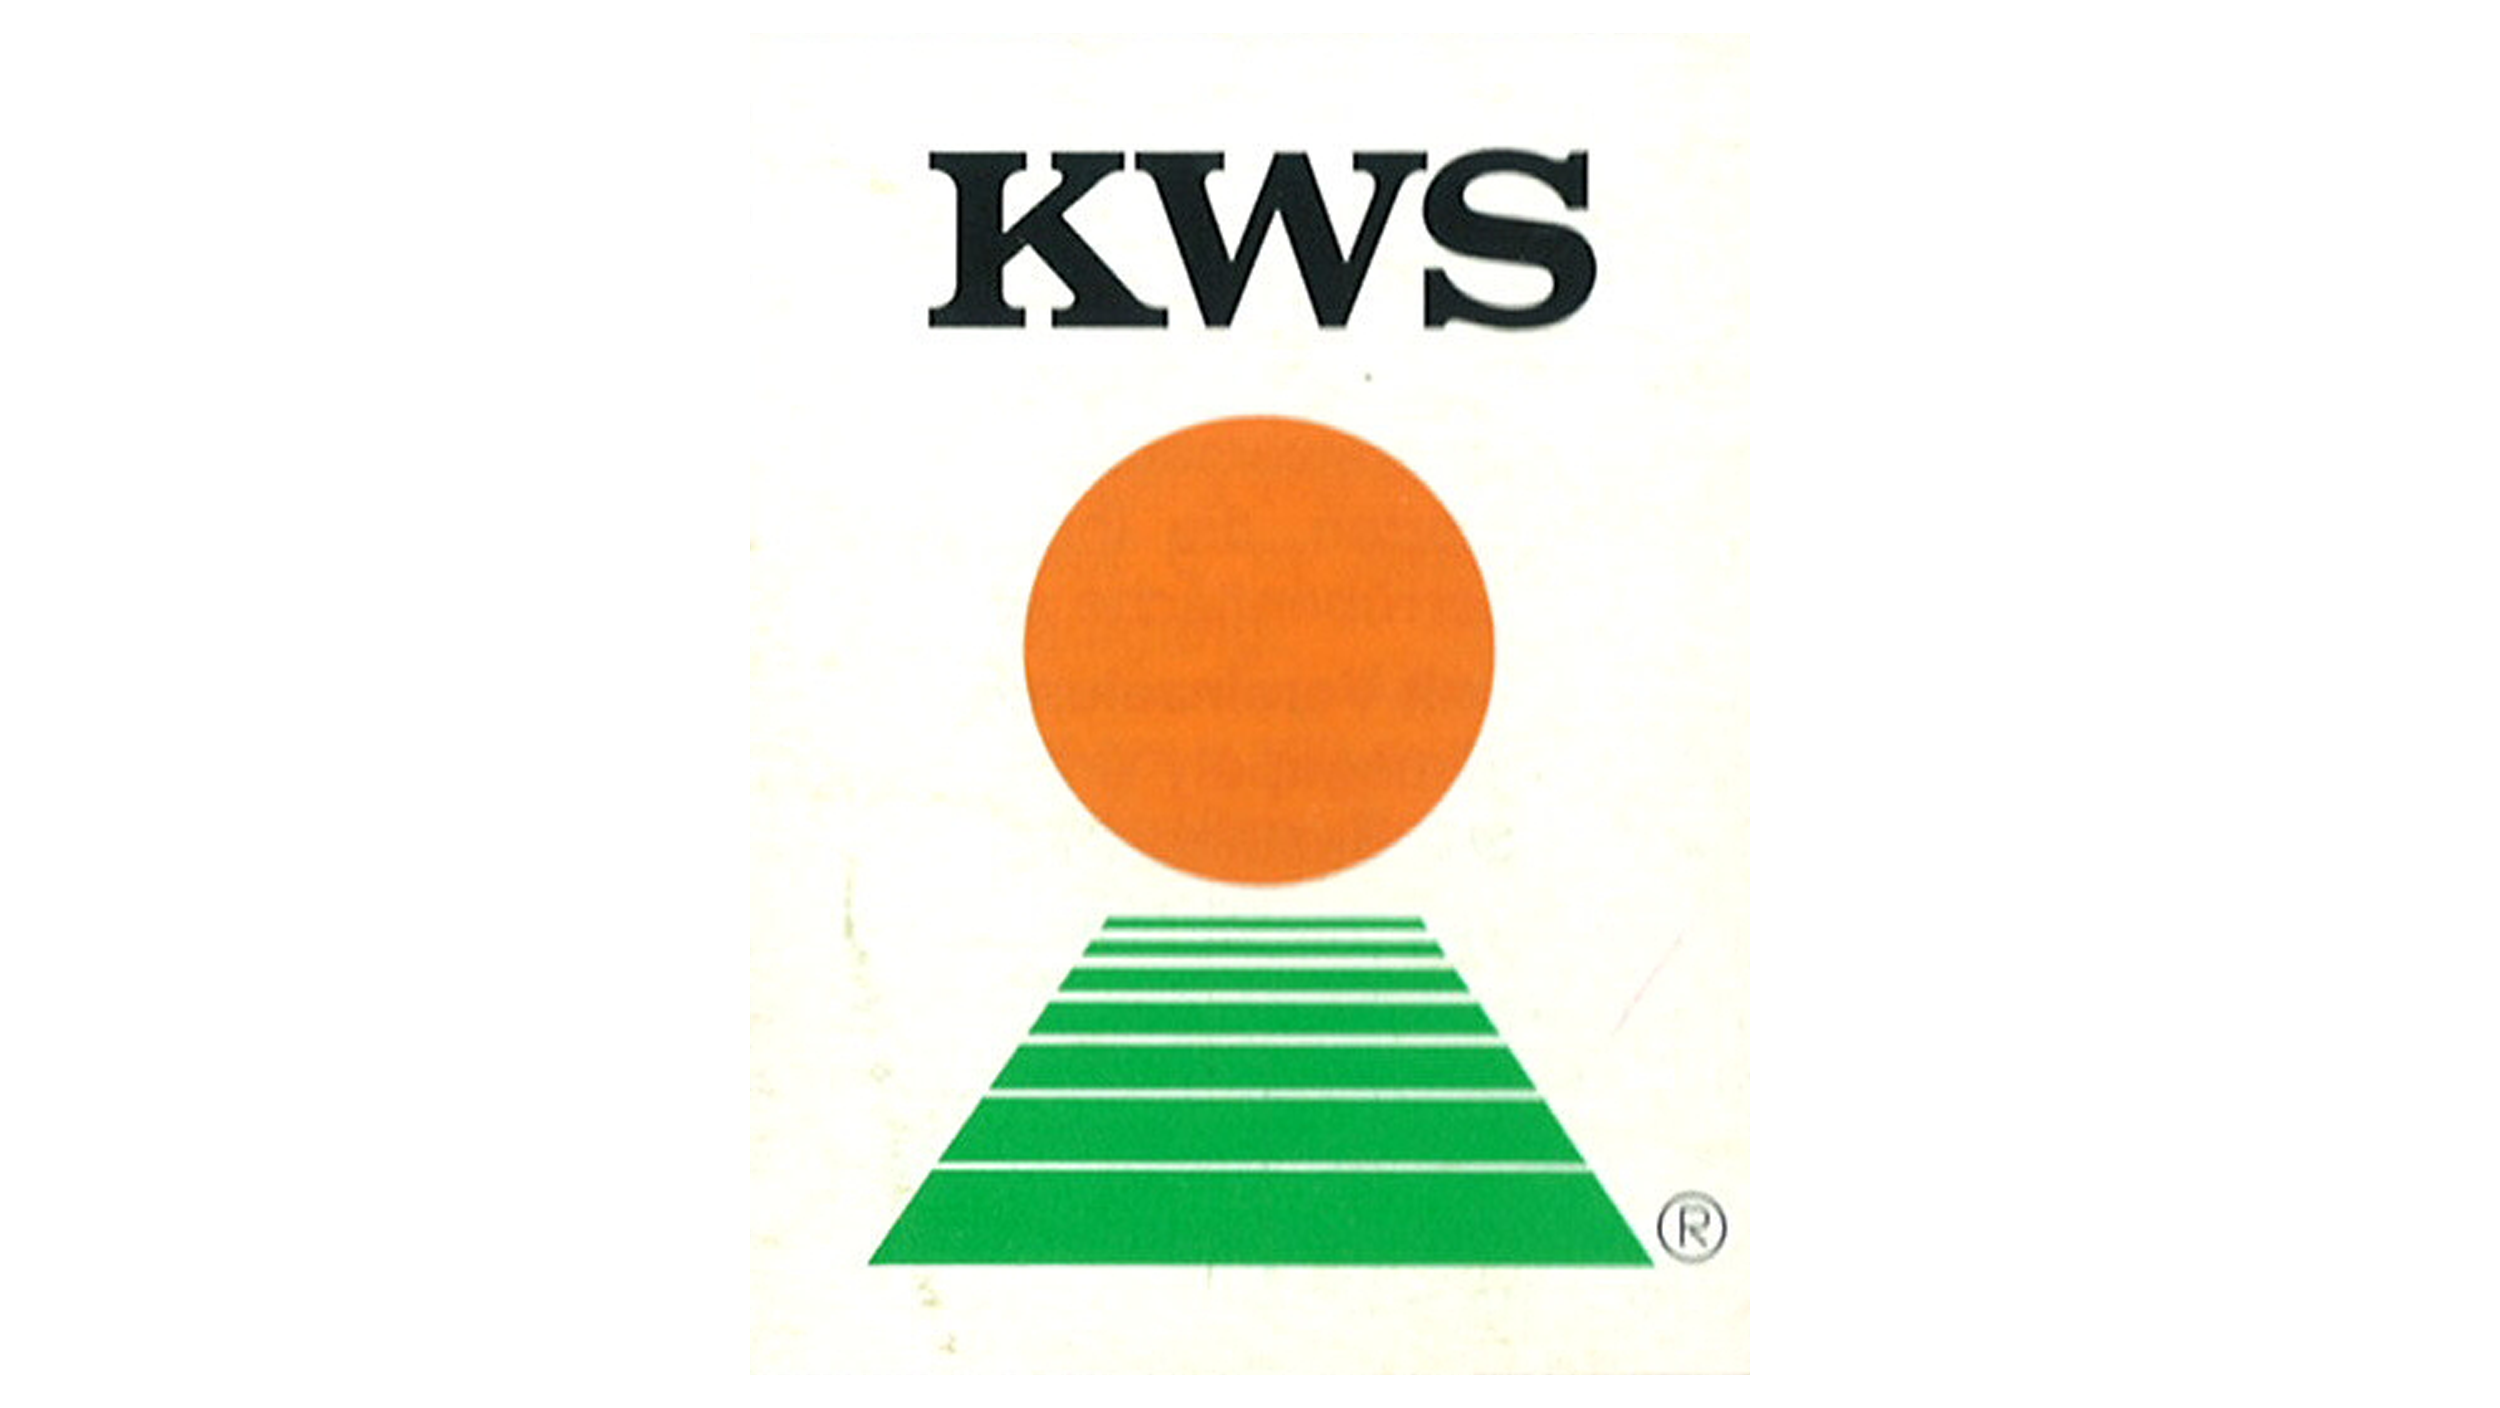 KWS logo since 1972